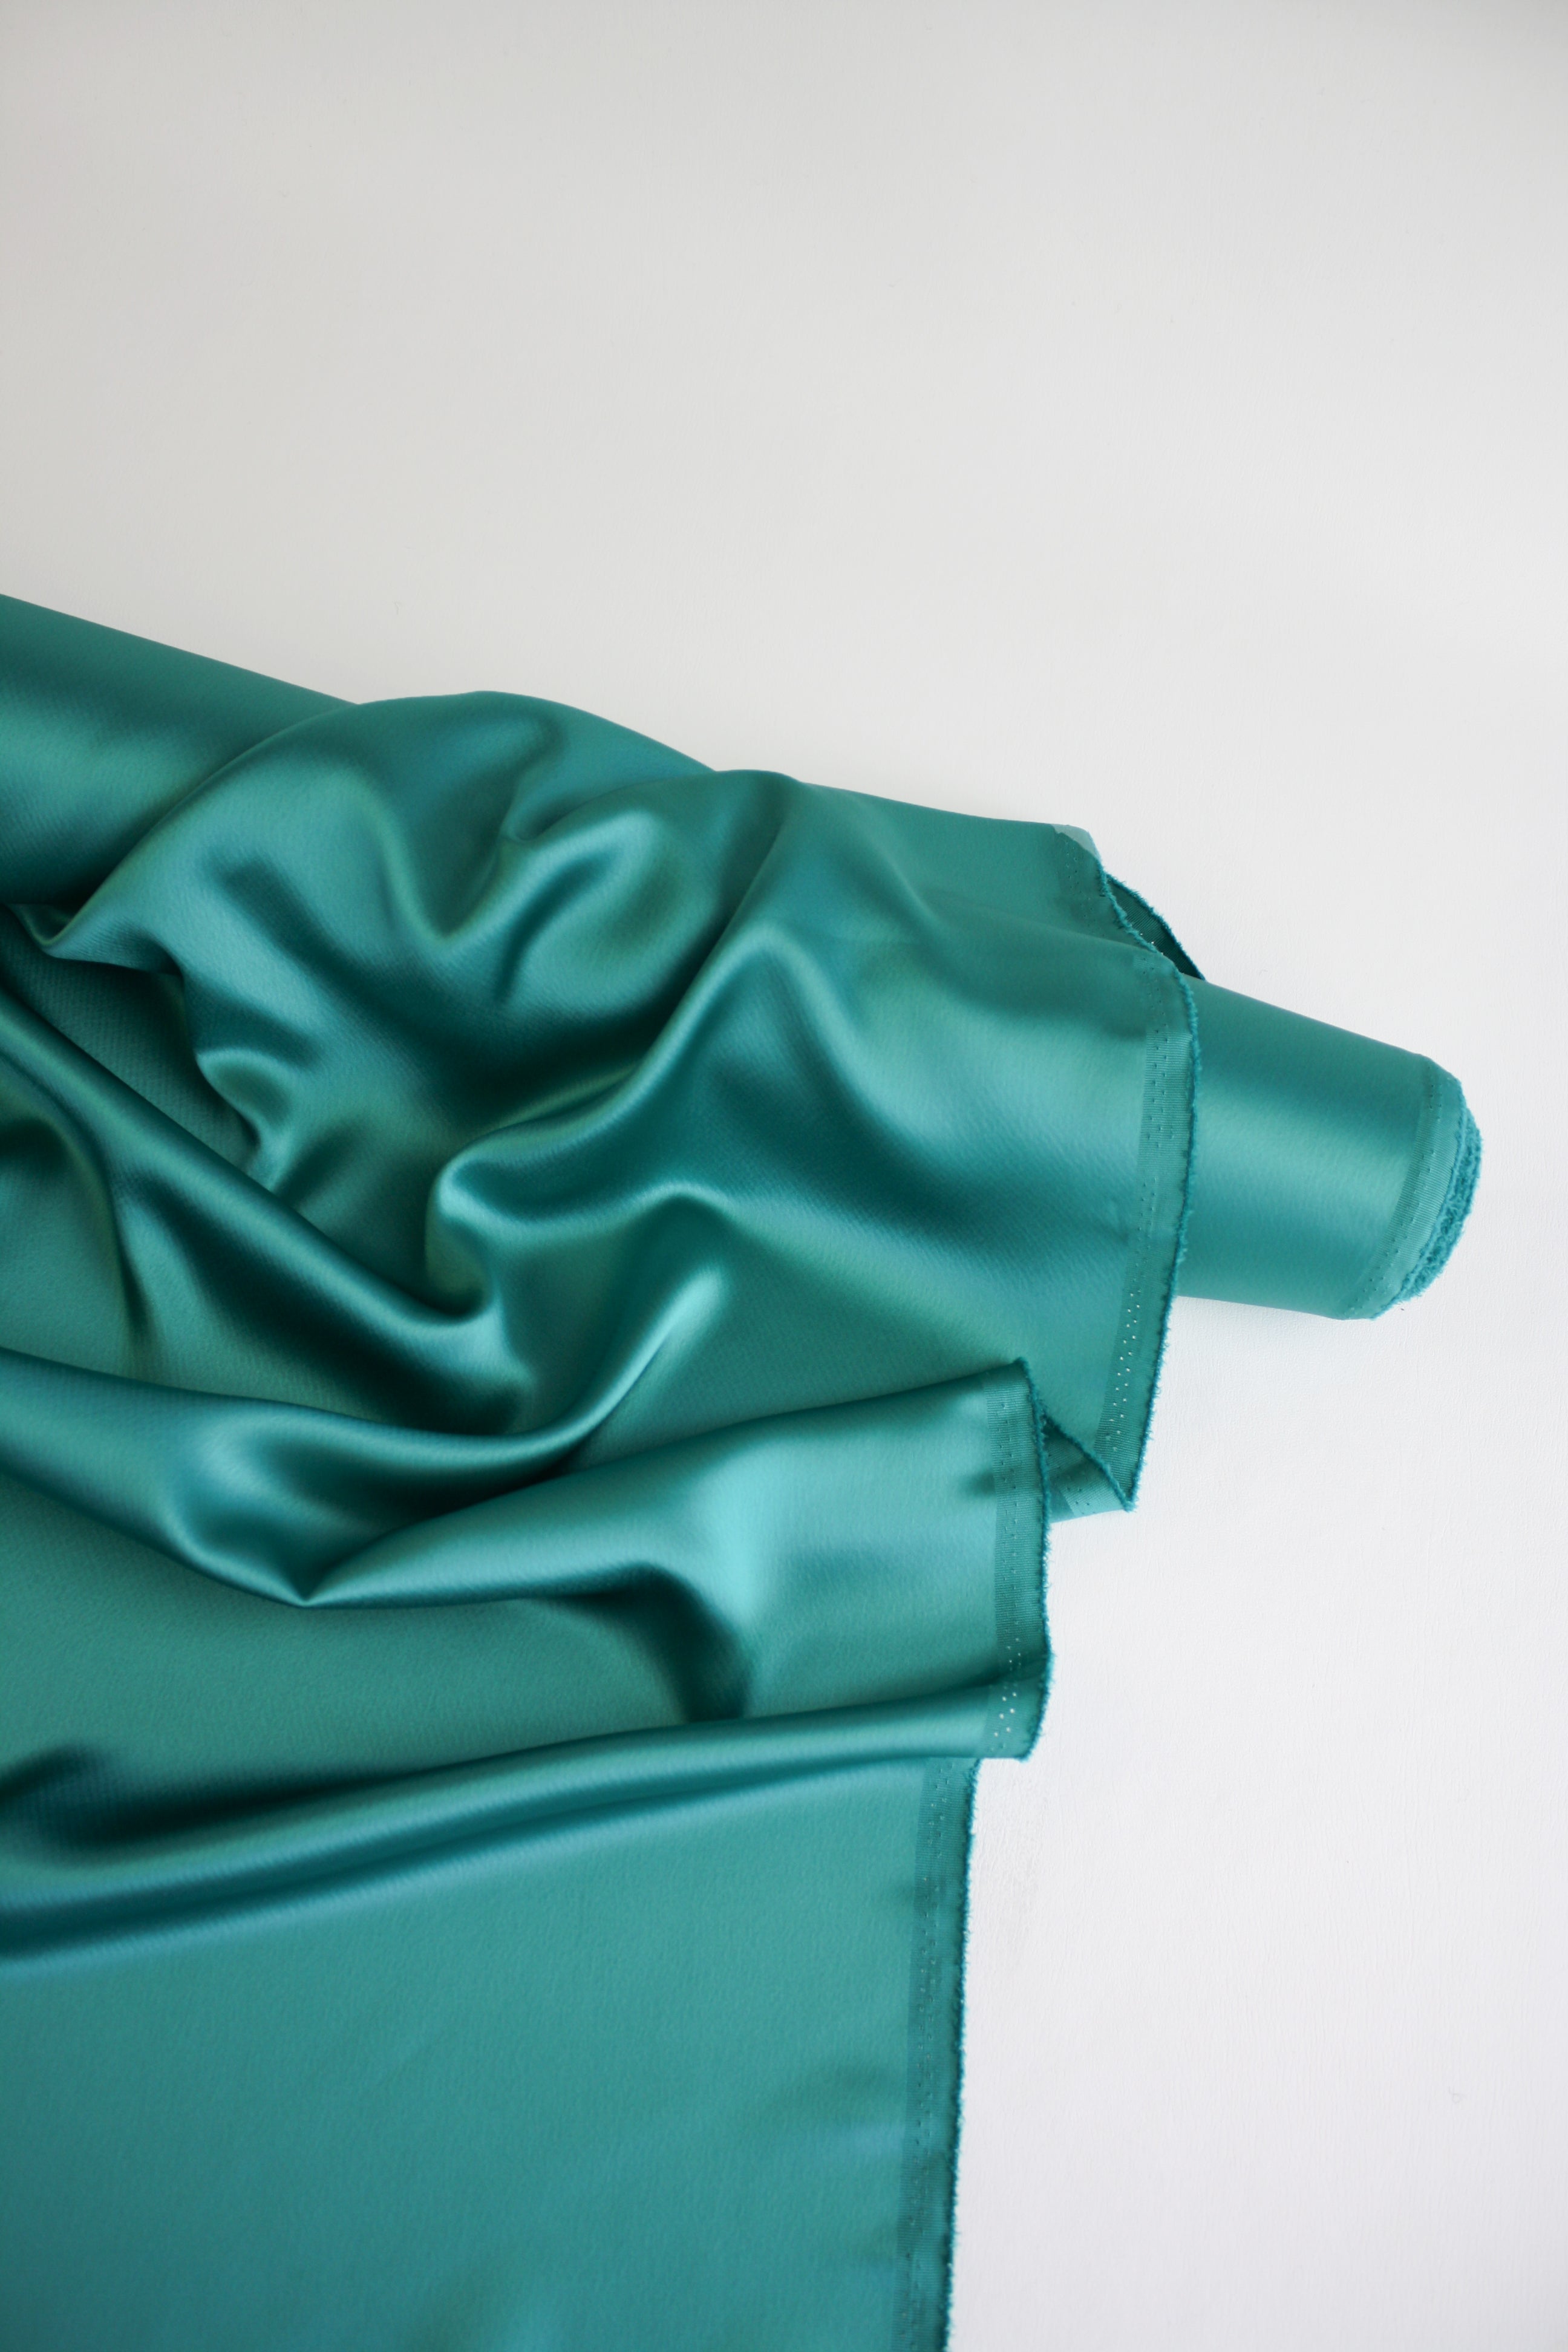 Hammered Satin  Turquoise (2.7M) – Drapers Fabrics